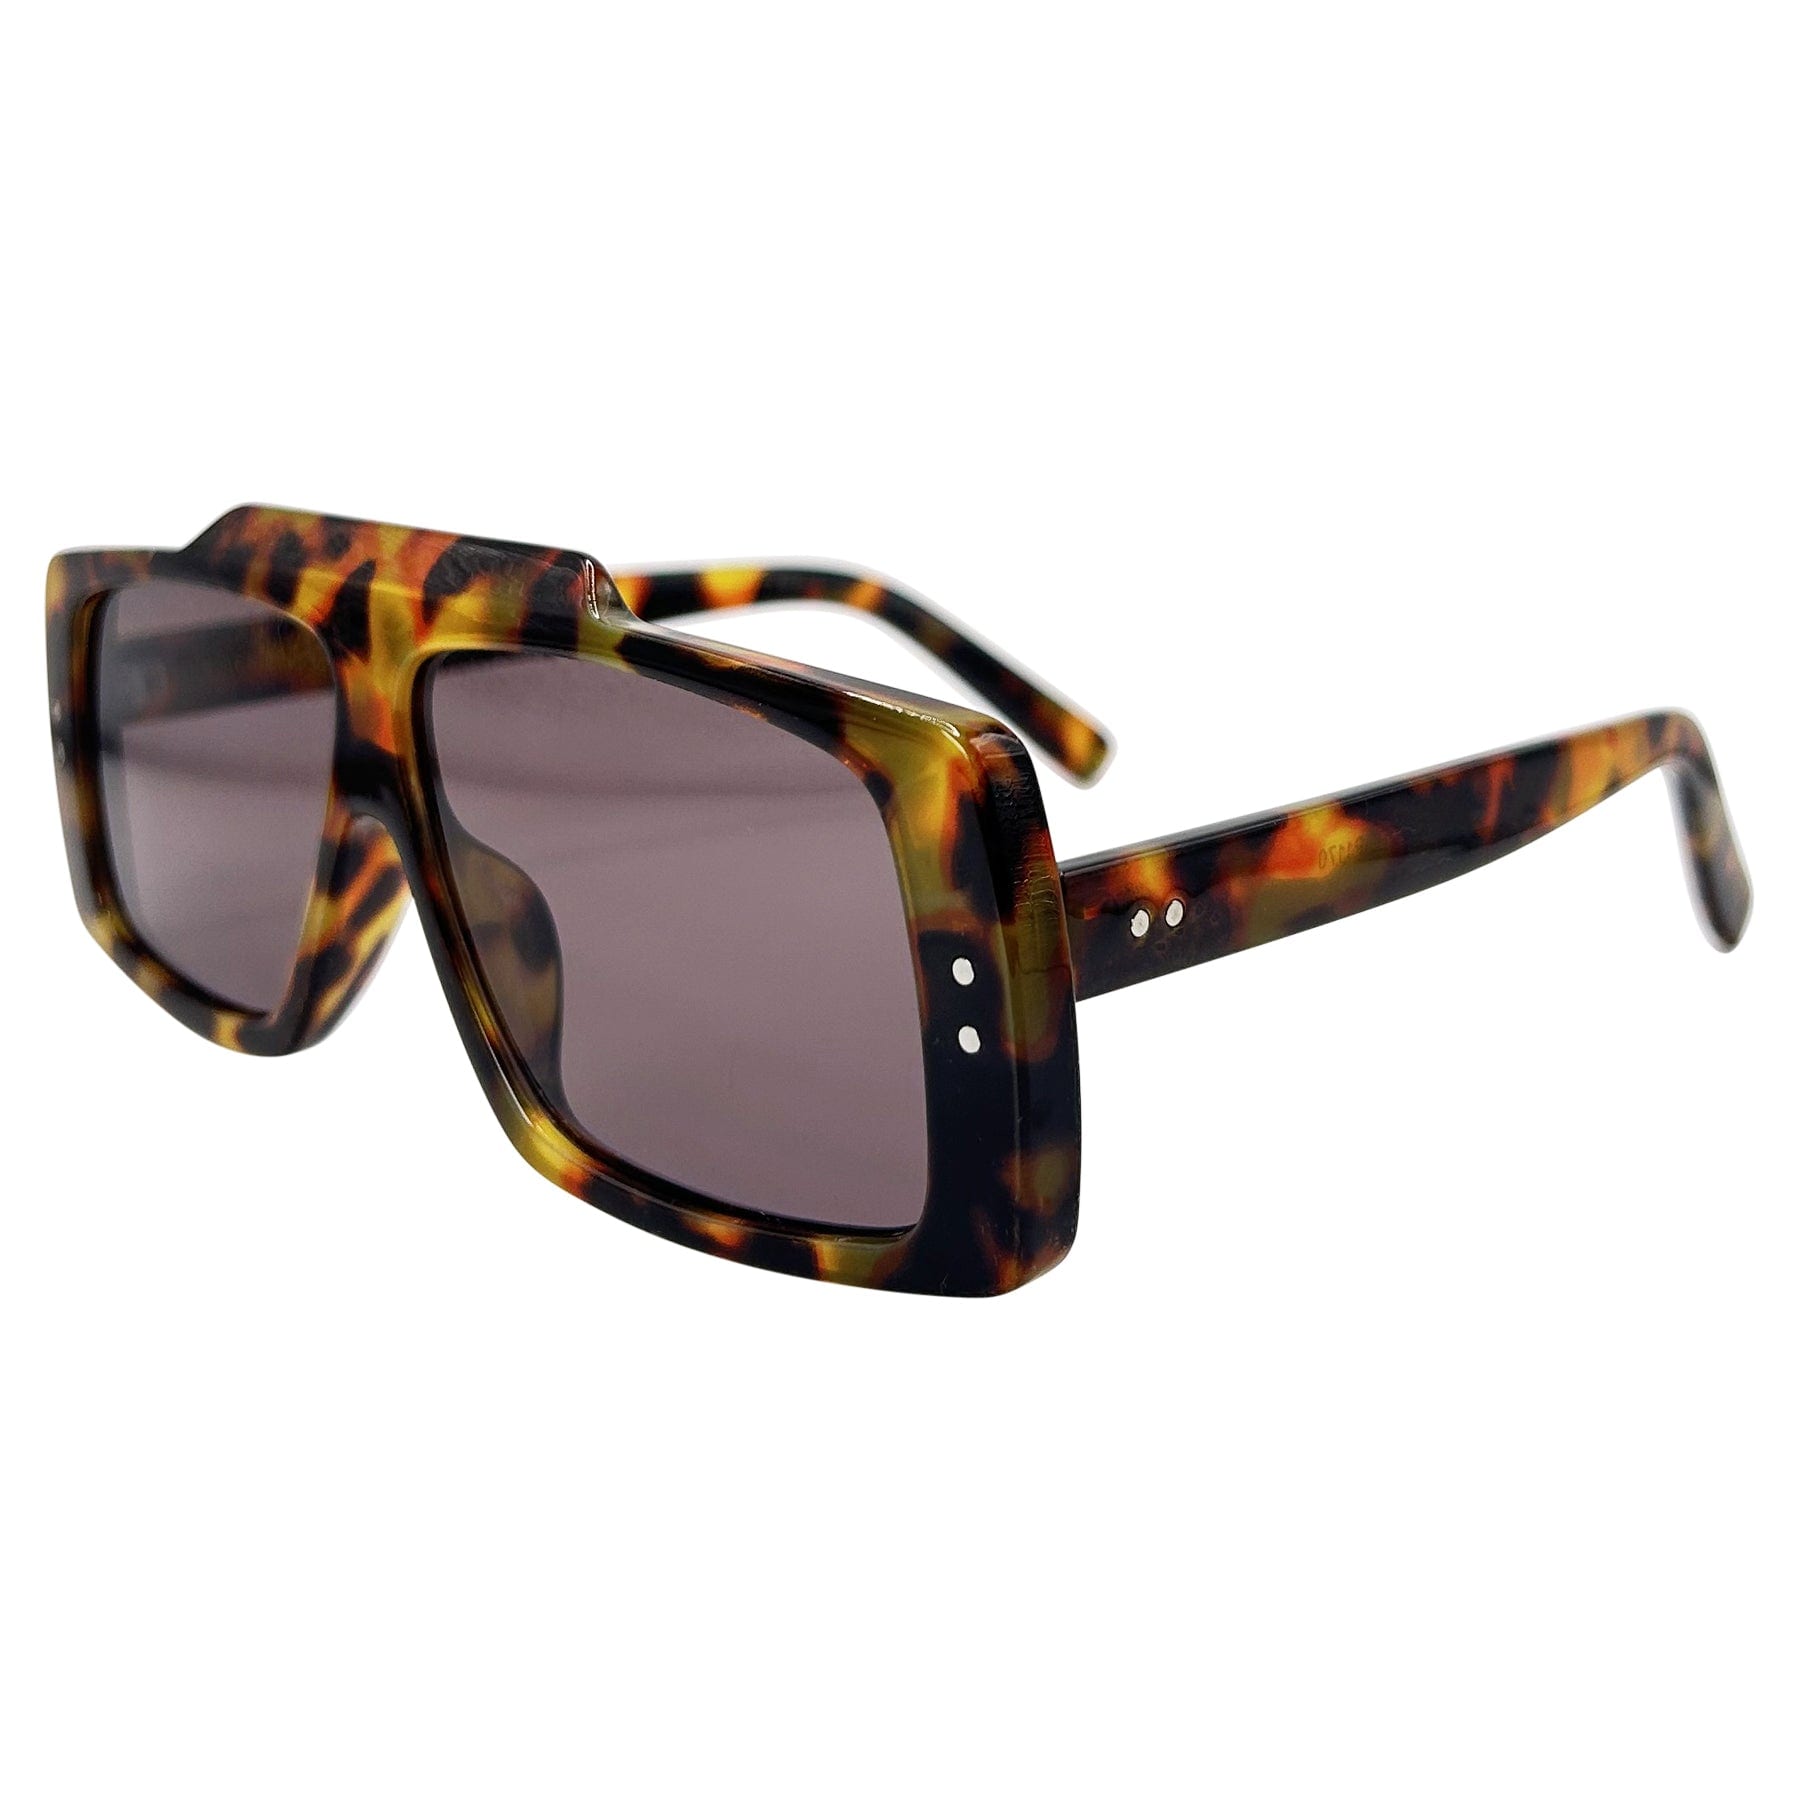 boho tortoise shell sunglasses with an aviator frame and brown lens